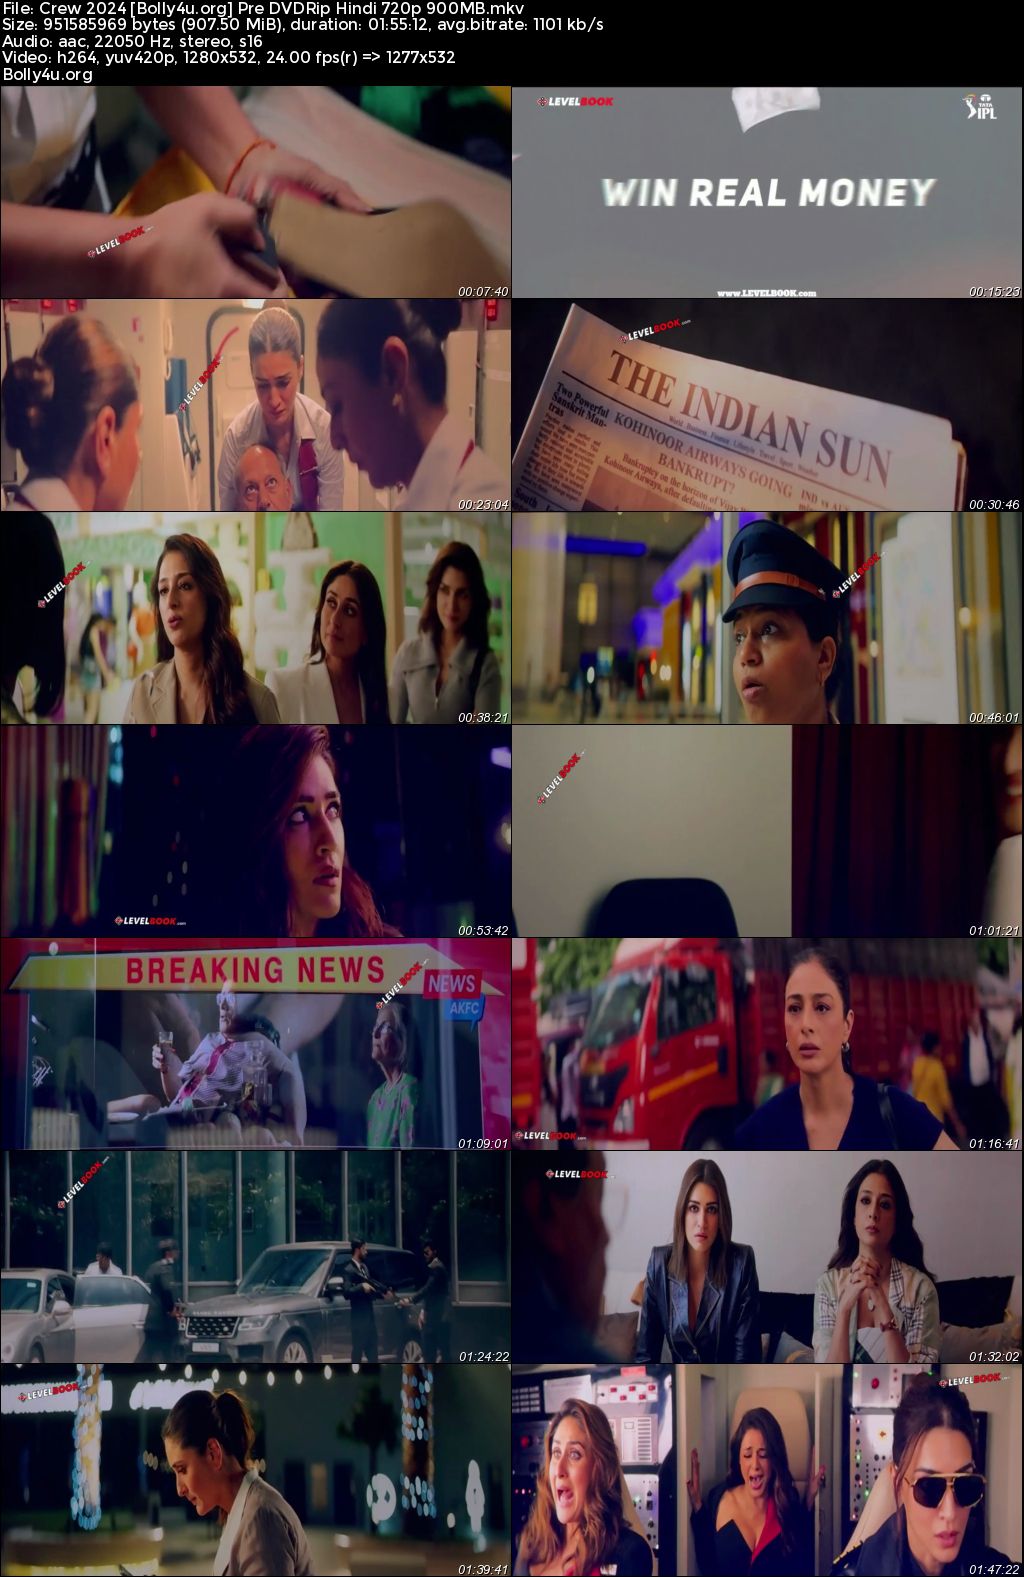 Crew 2024 Pre DVDRip Hindi Full Movie Download 1080p 720p 480p